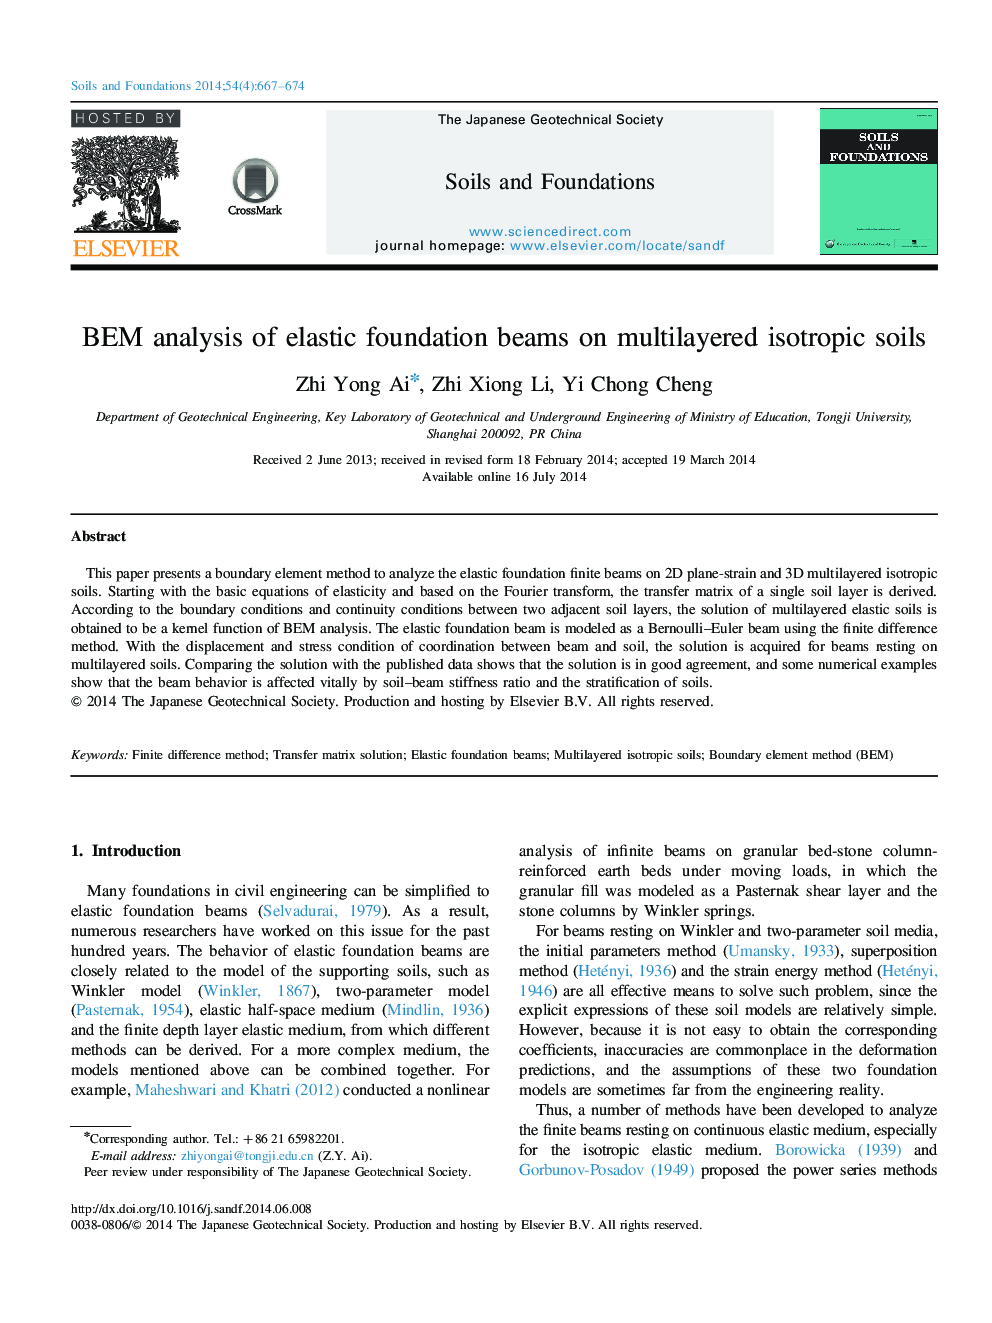 BEM analysis of elastic foundation beams on multilayered isotropic soils 